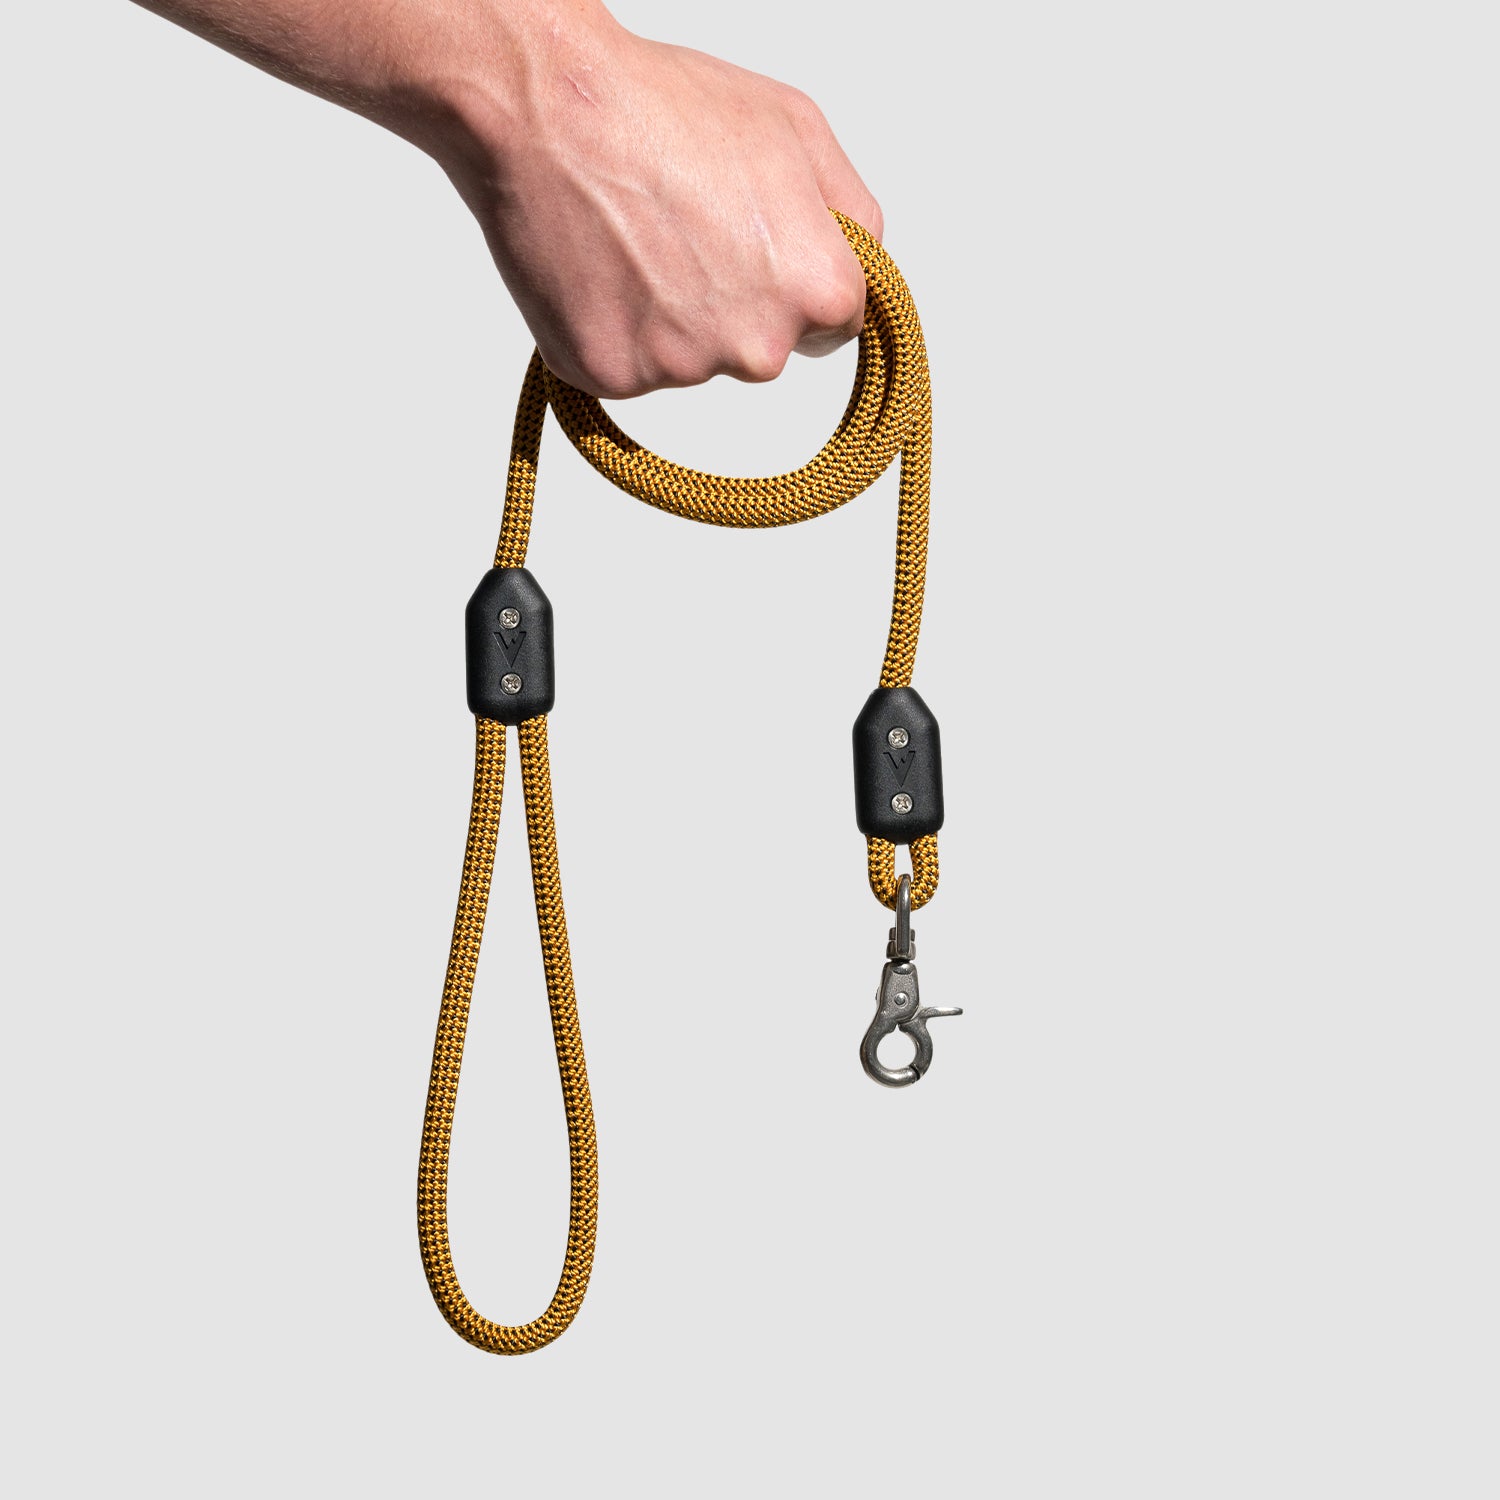 atlas pet company lifetime leash climbing rope lifetime warranty dog leash --honey